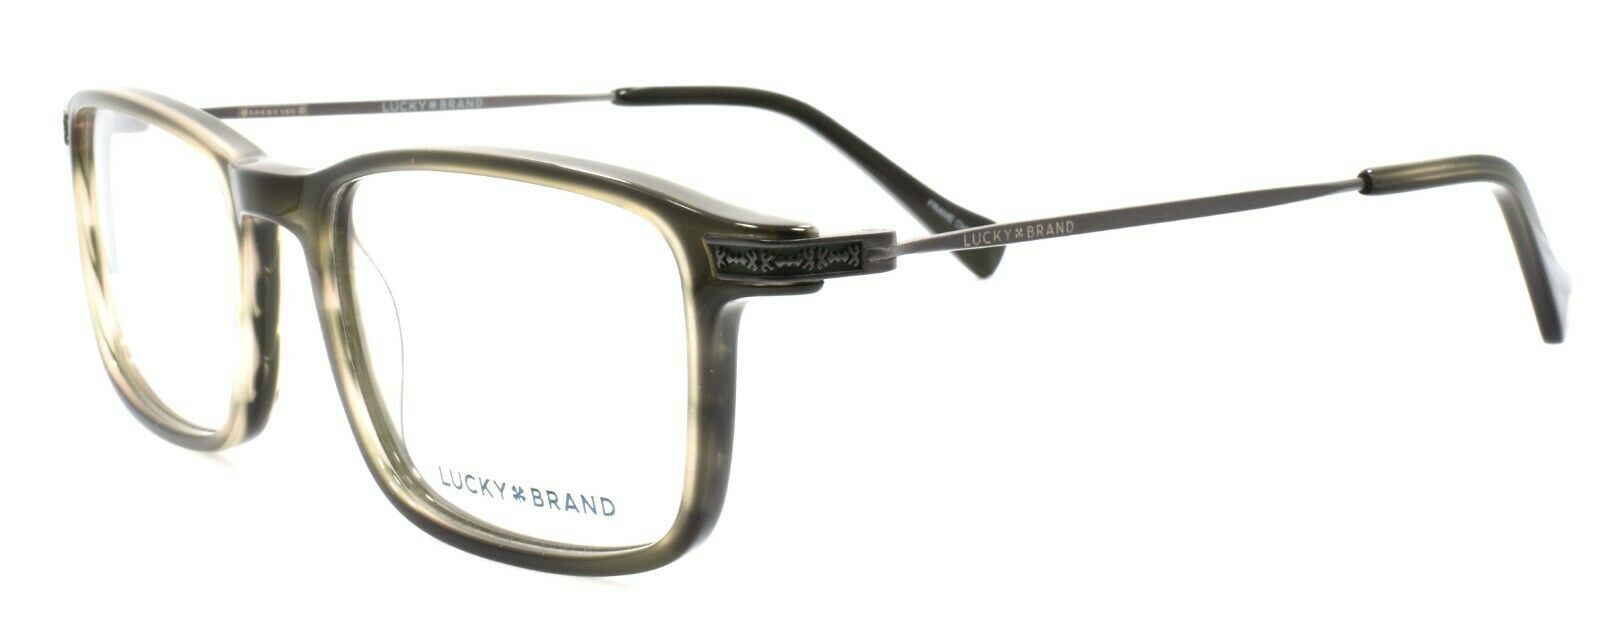 1-LUCKY BRAND D402 Men's Eyeglasses Frames 51-18-140 Olive + CASE-751286281903-IKSpecs